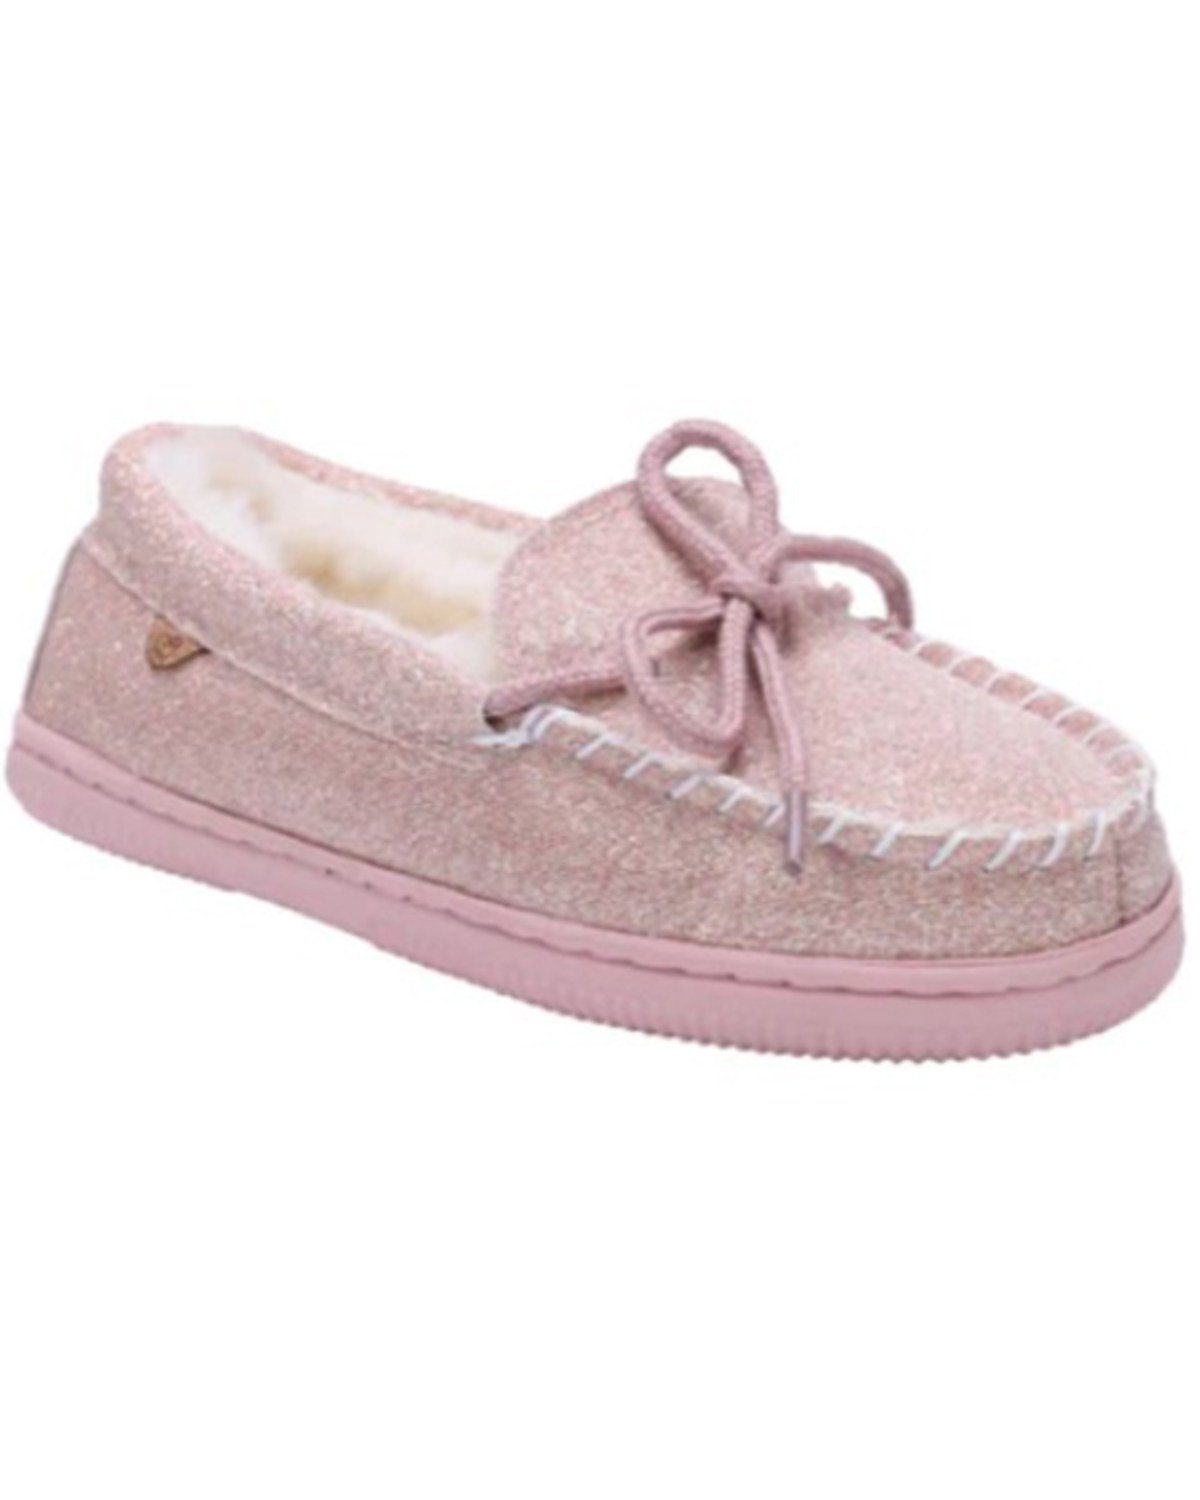 Lamo Footwear Girls' Casual Slippers - Moc Toe